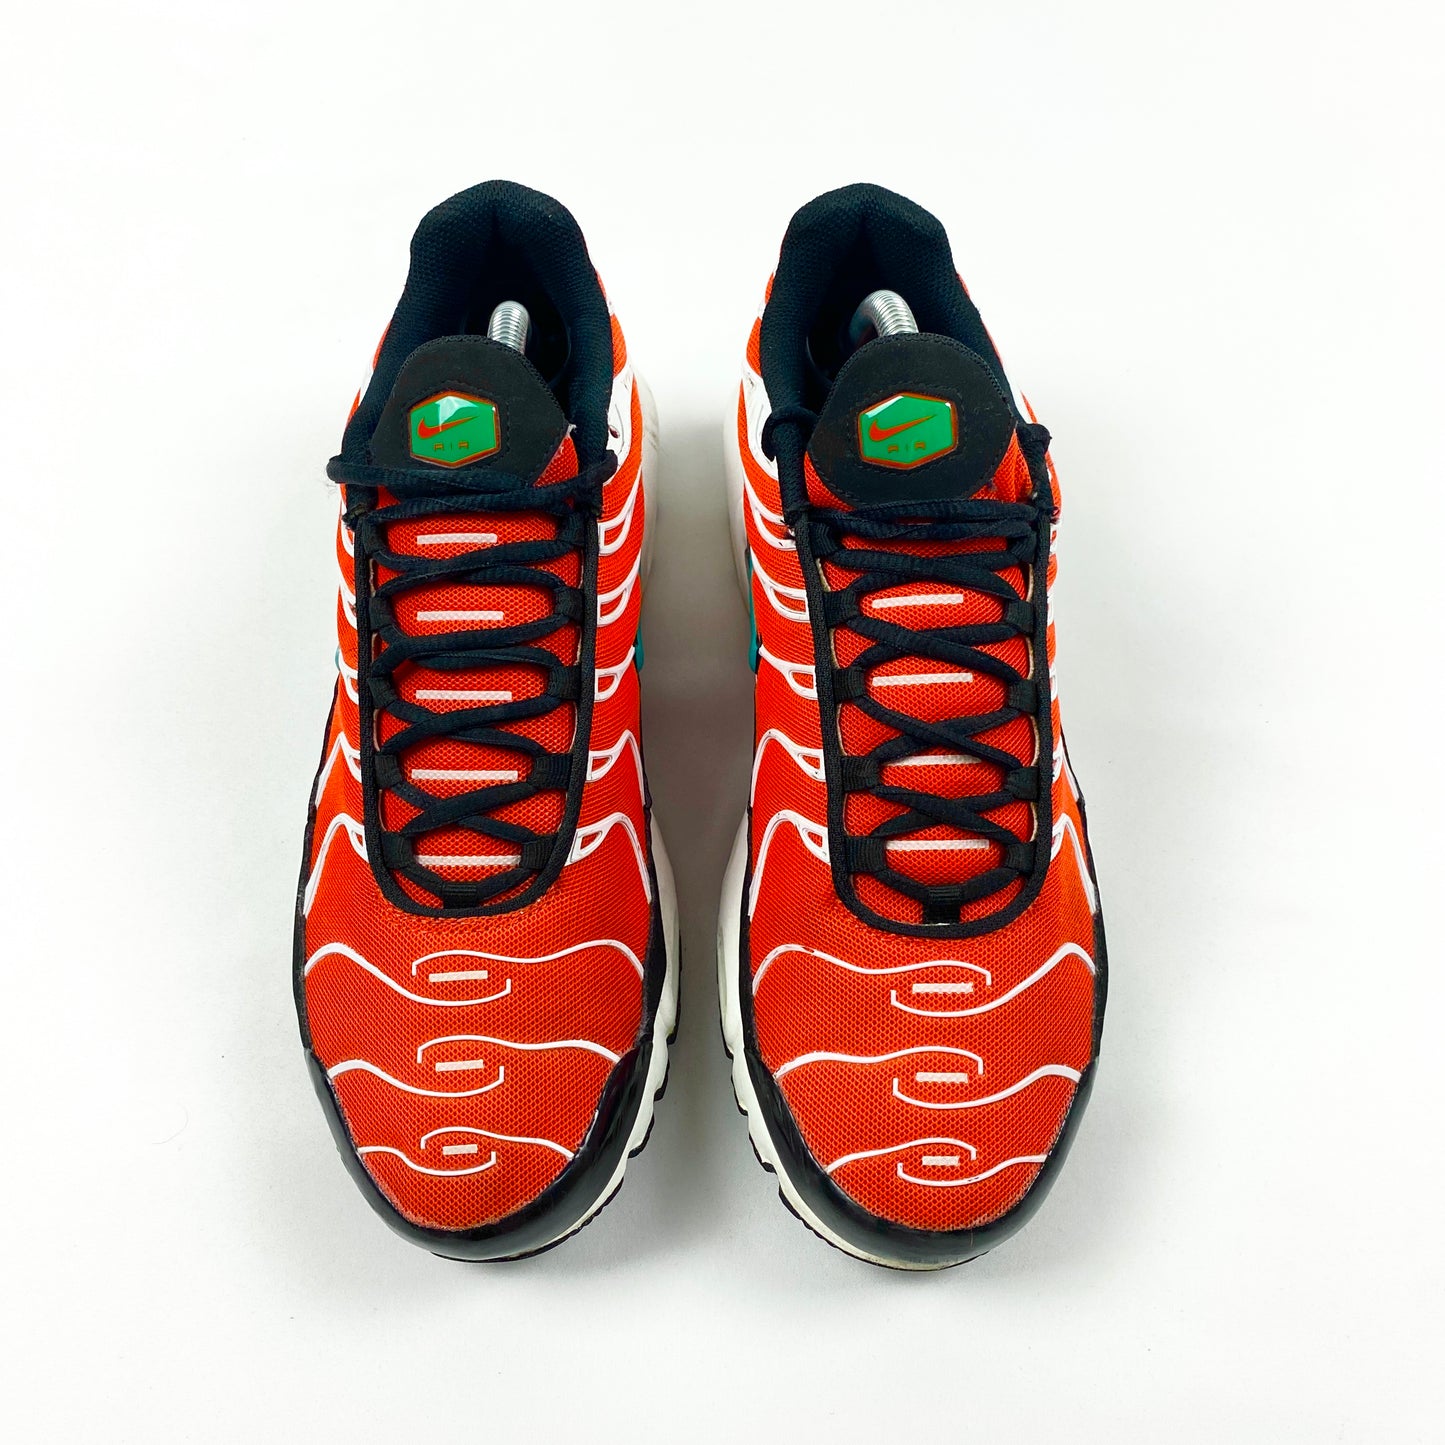 Nike Air Max Plus Tn 'Team Orange Neptune Green' (2018)